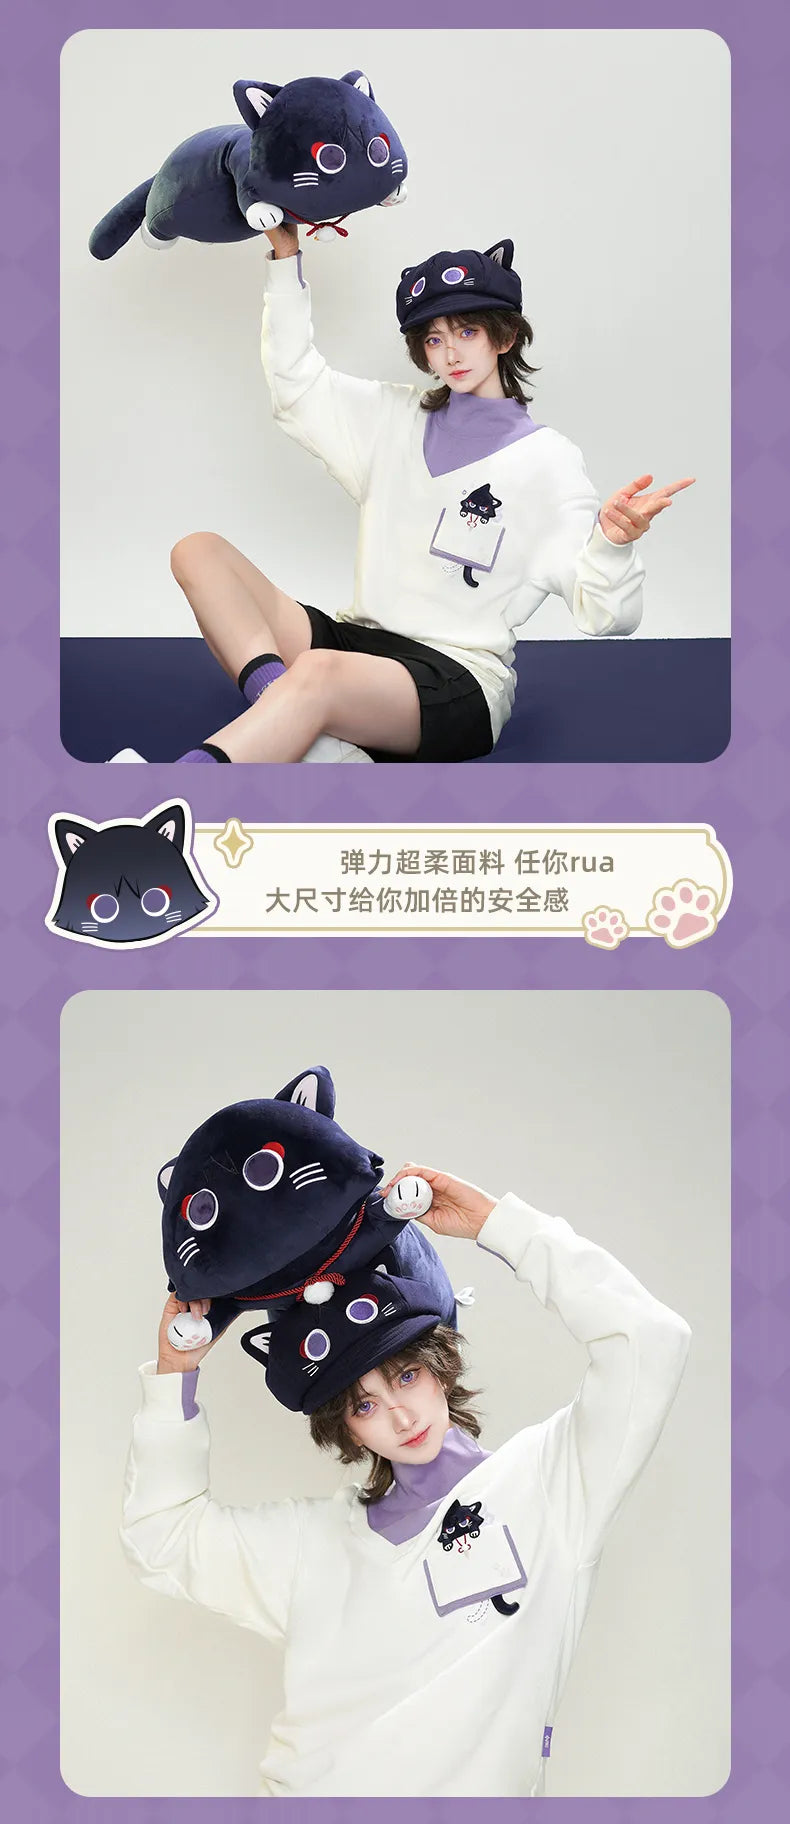 (Pre-Order) Genshin Impact - Wanderer Impression - Meow Kitty Plushy